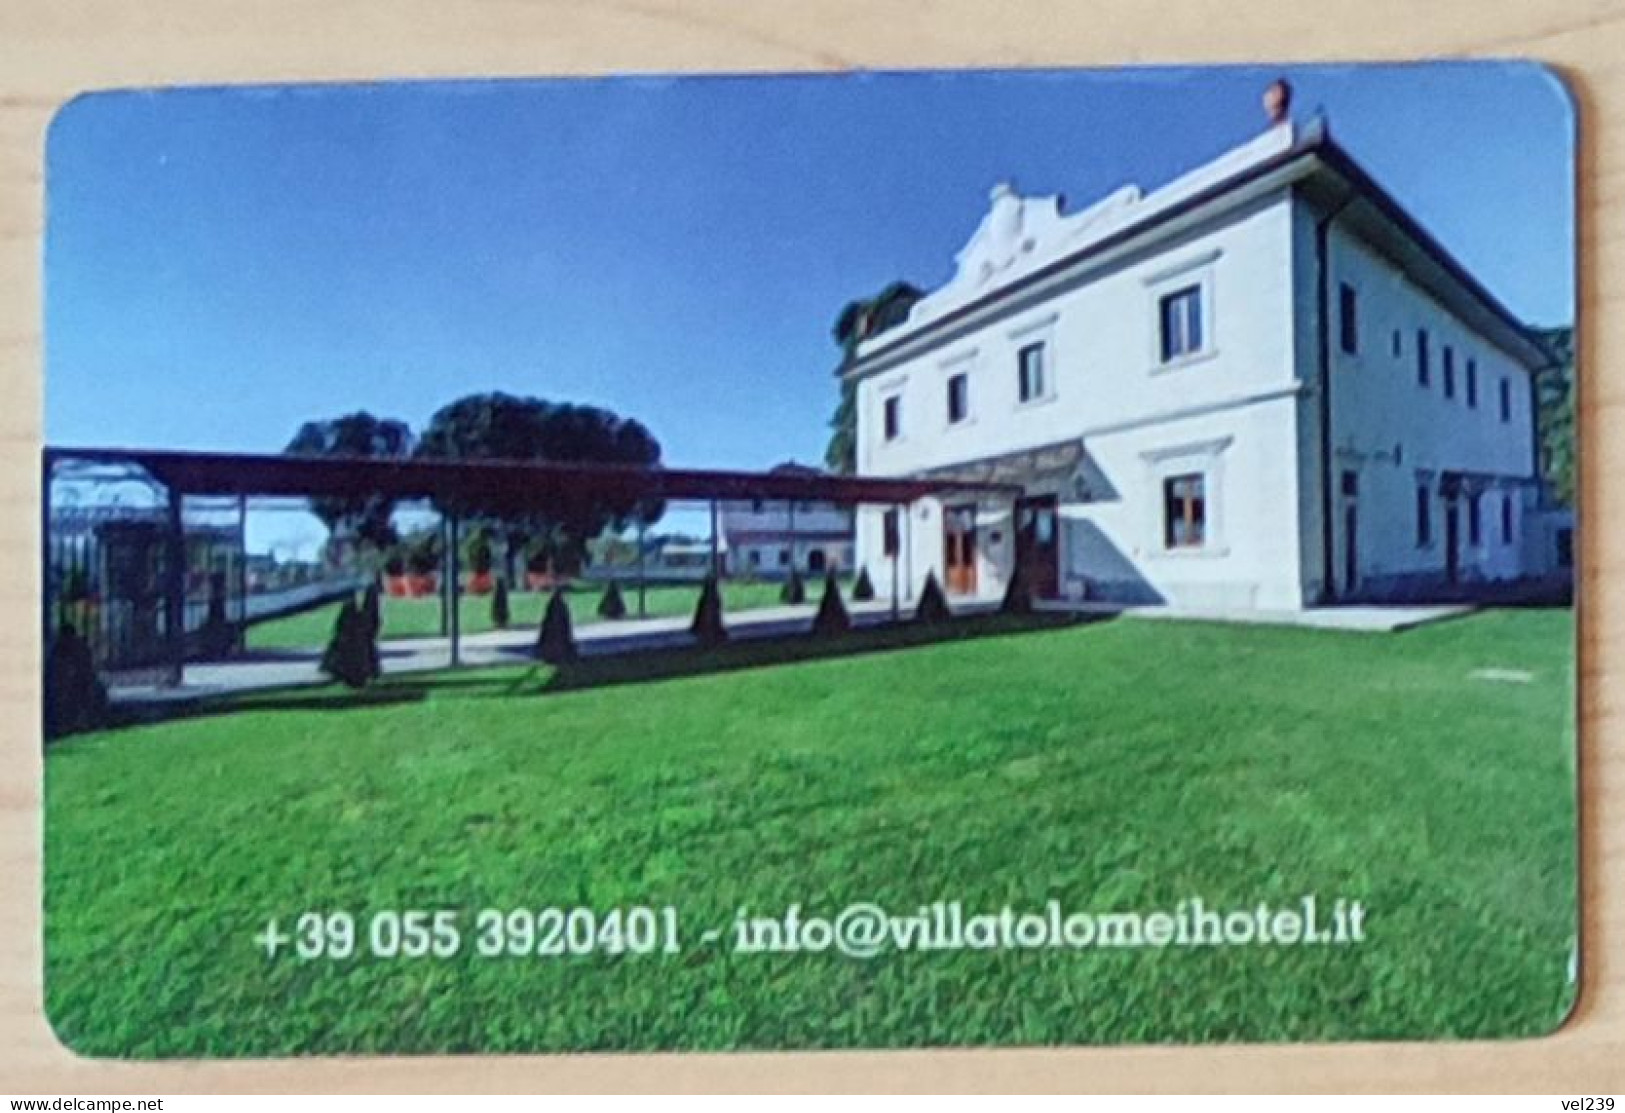 Italy. Villa Tolomei - Cartes D'hotel